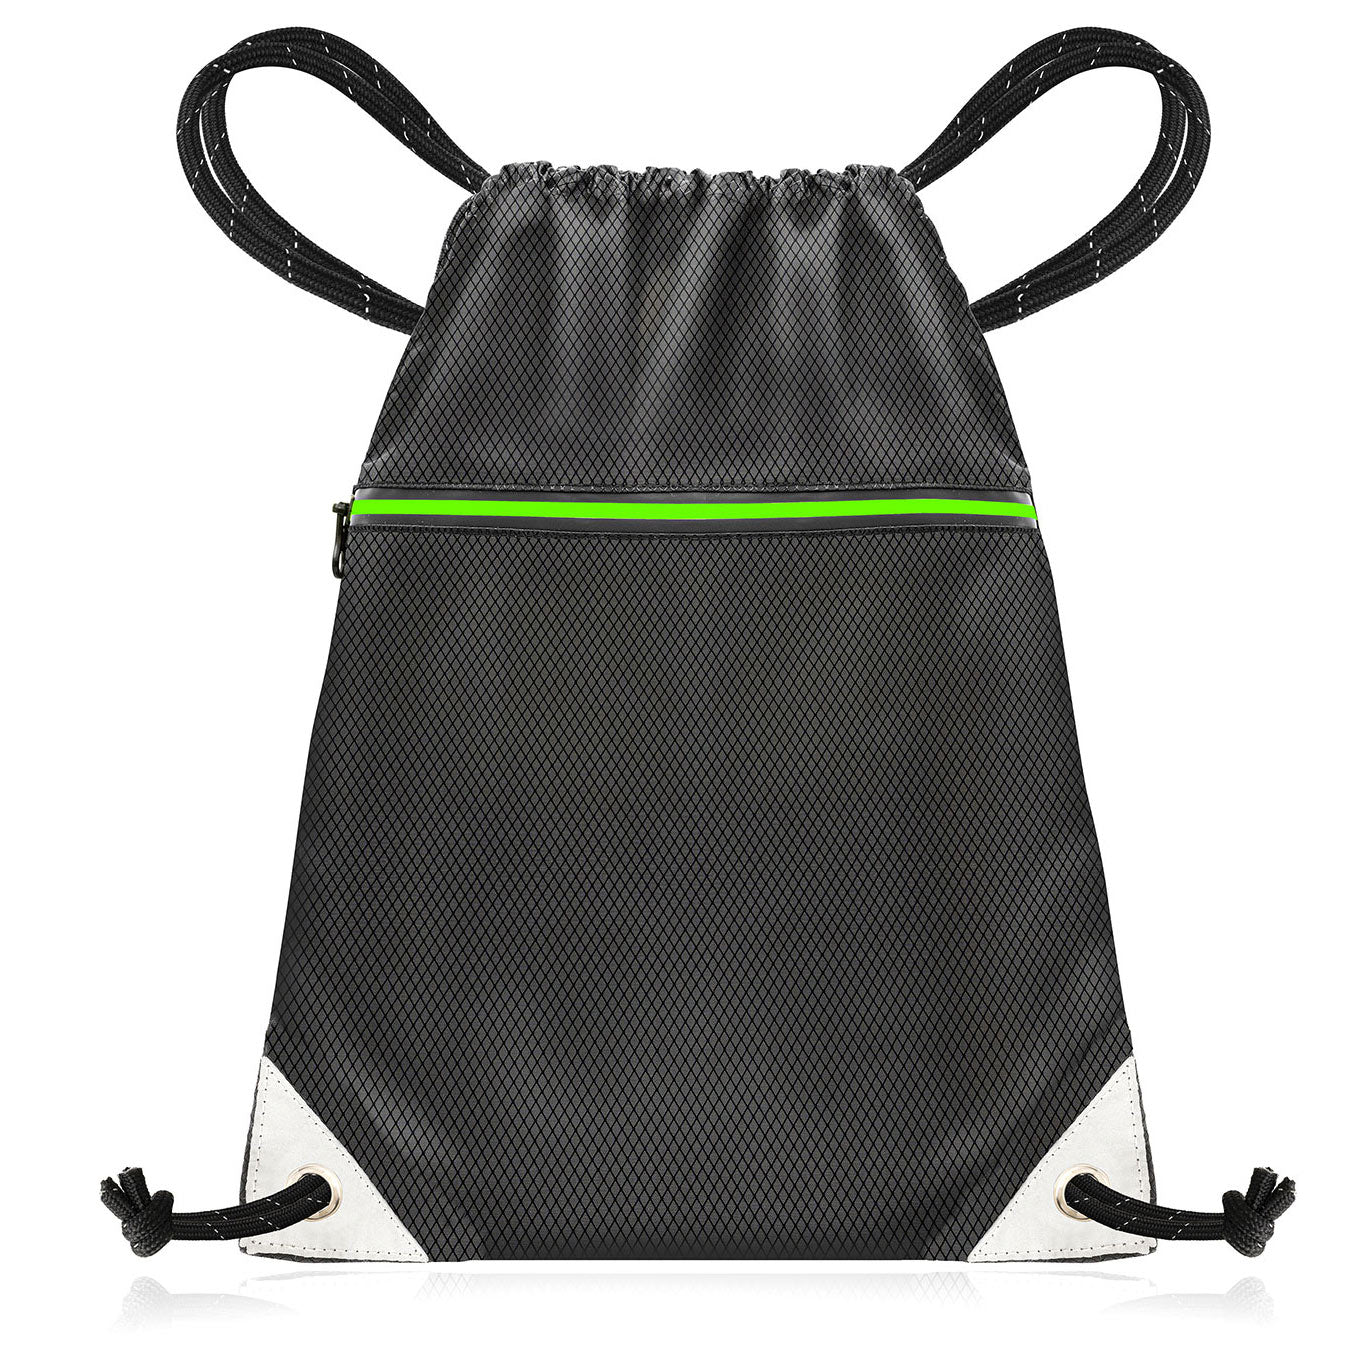 aZengear Waterproof Drawstring Gym Bag for PE, Swim, Sport, Yoga